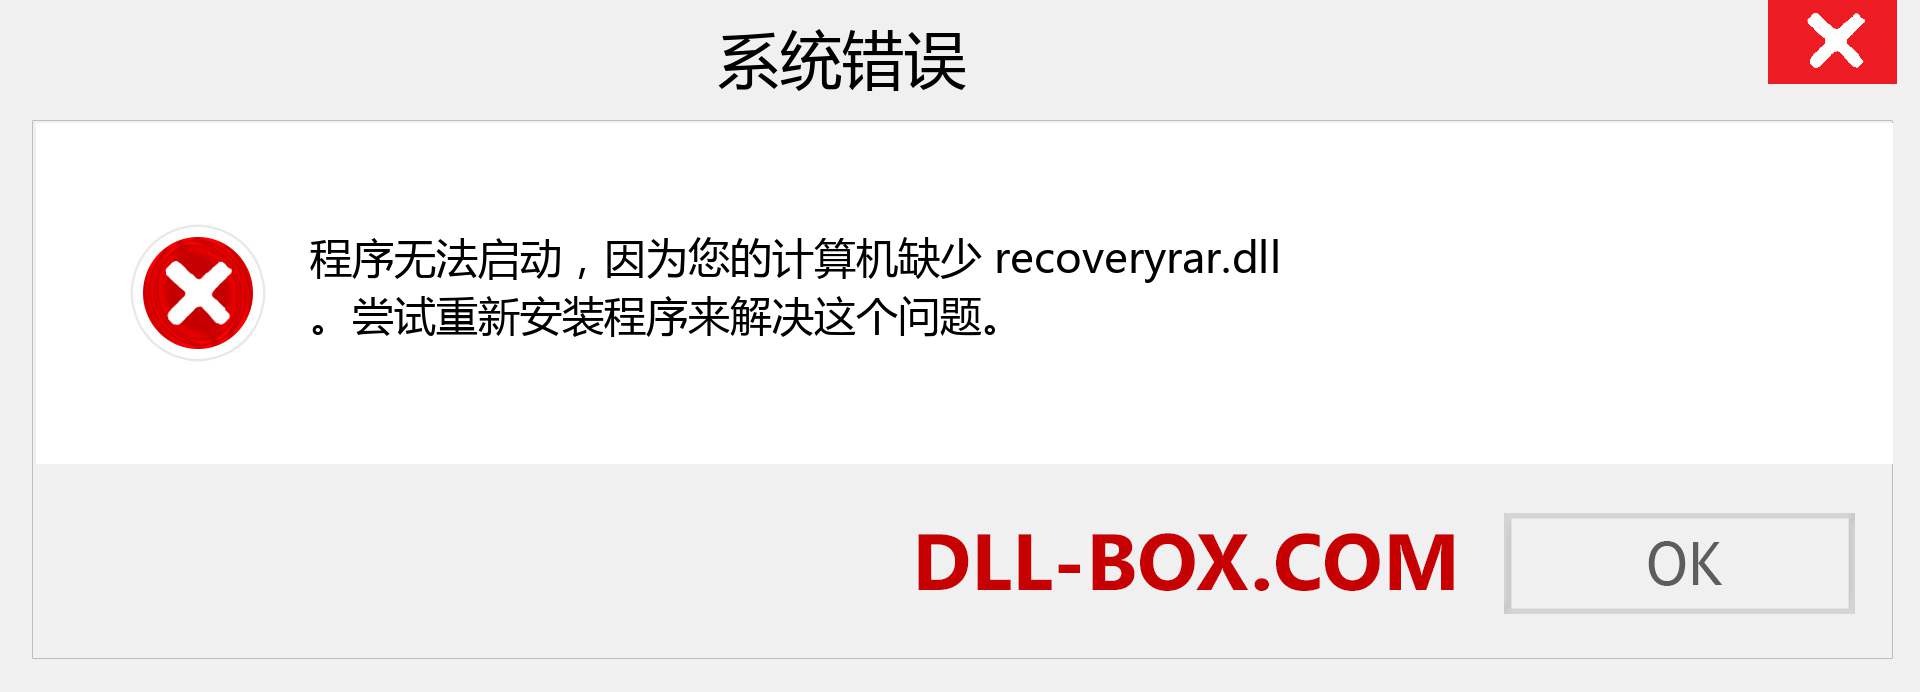 recoveryrar.dll 文件丢失？。 适用于 Windows 7、8、10 的下载 - 修复 Windows、照片、图像上的 recoveryrar dll 丢失错误